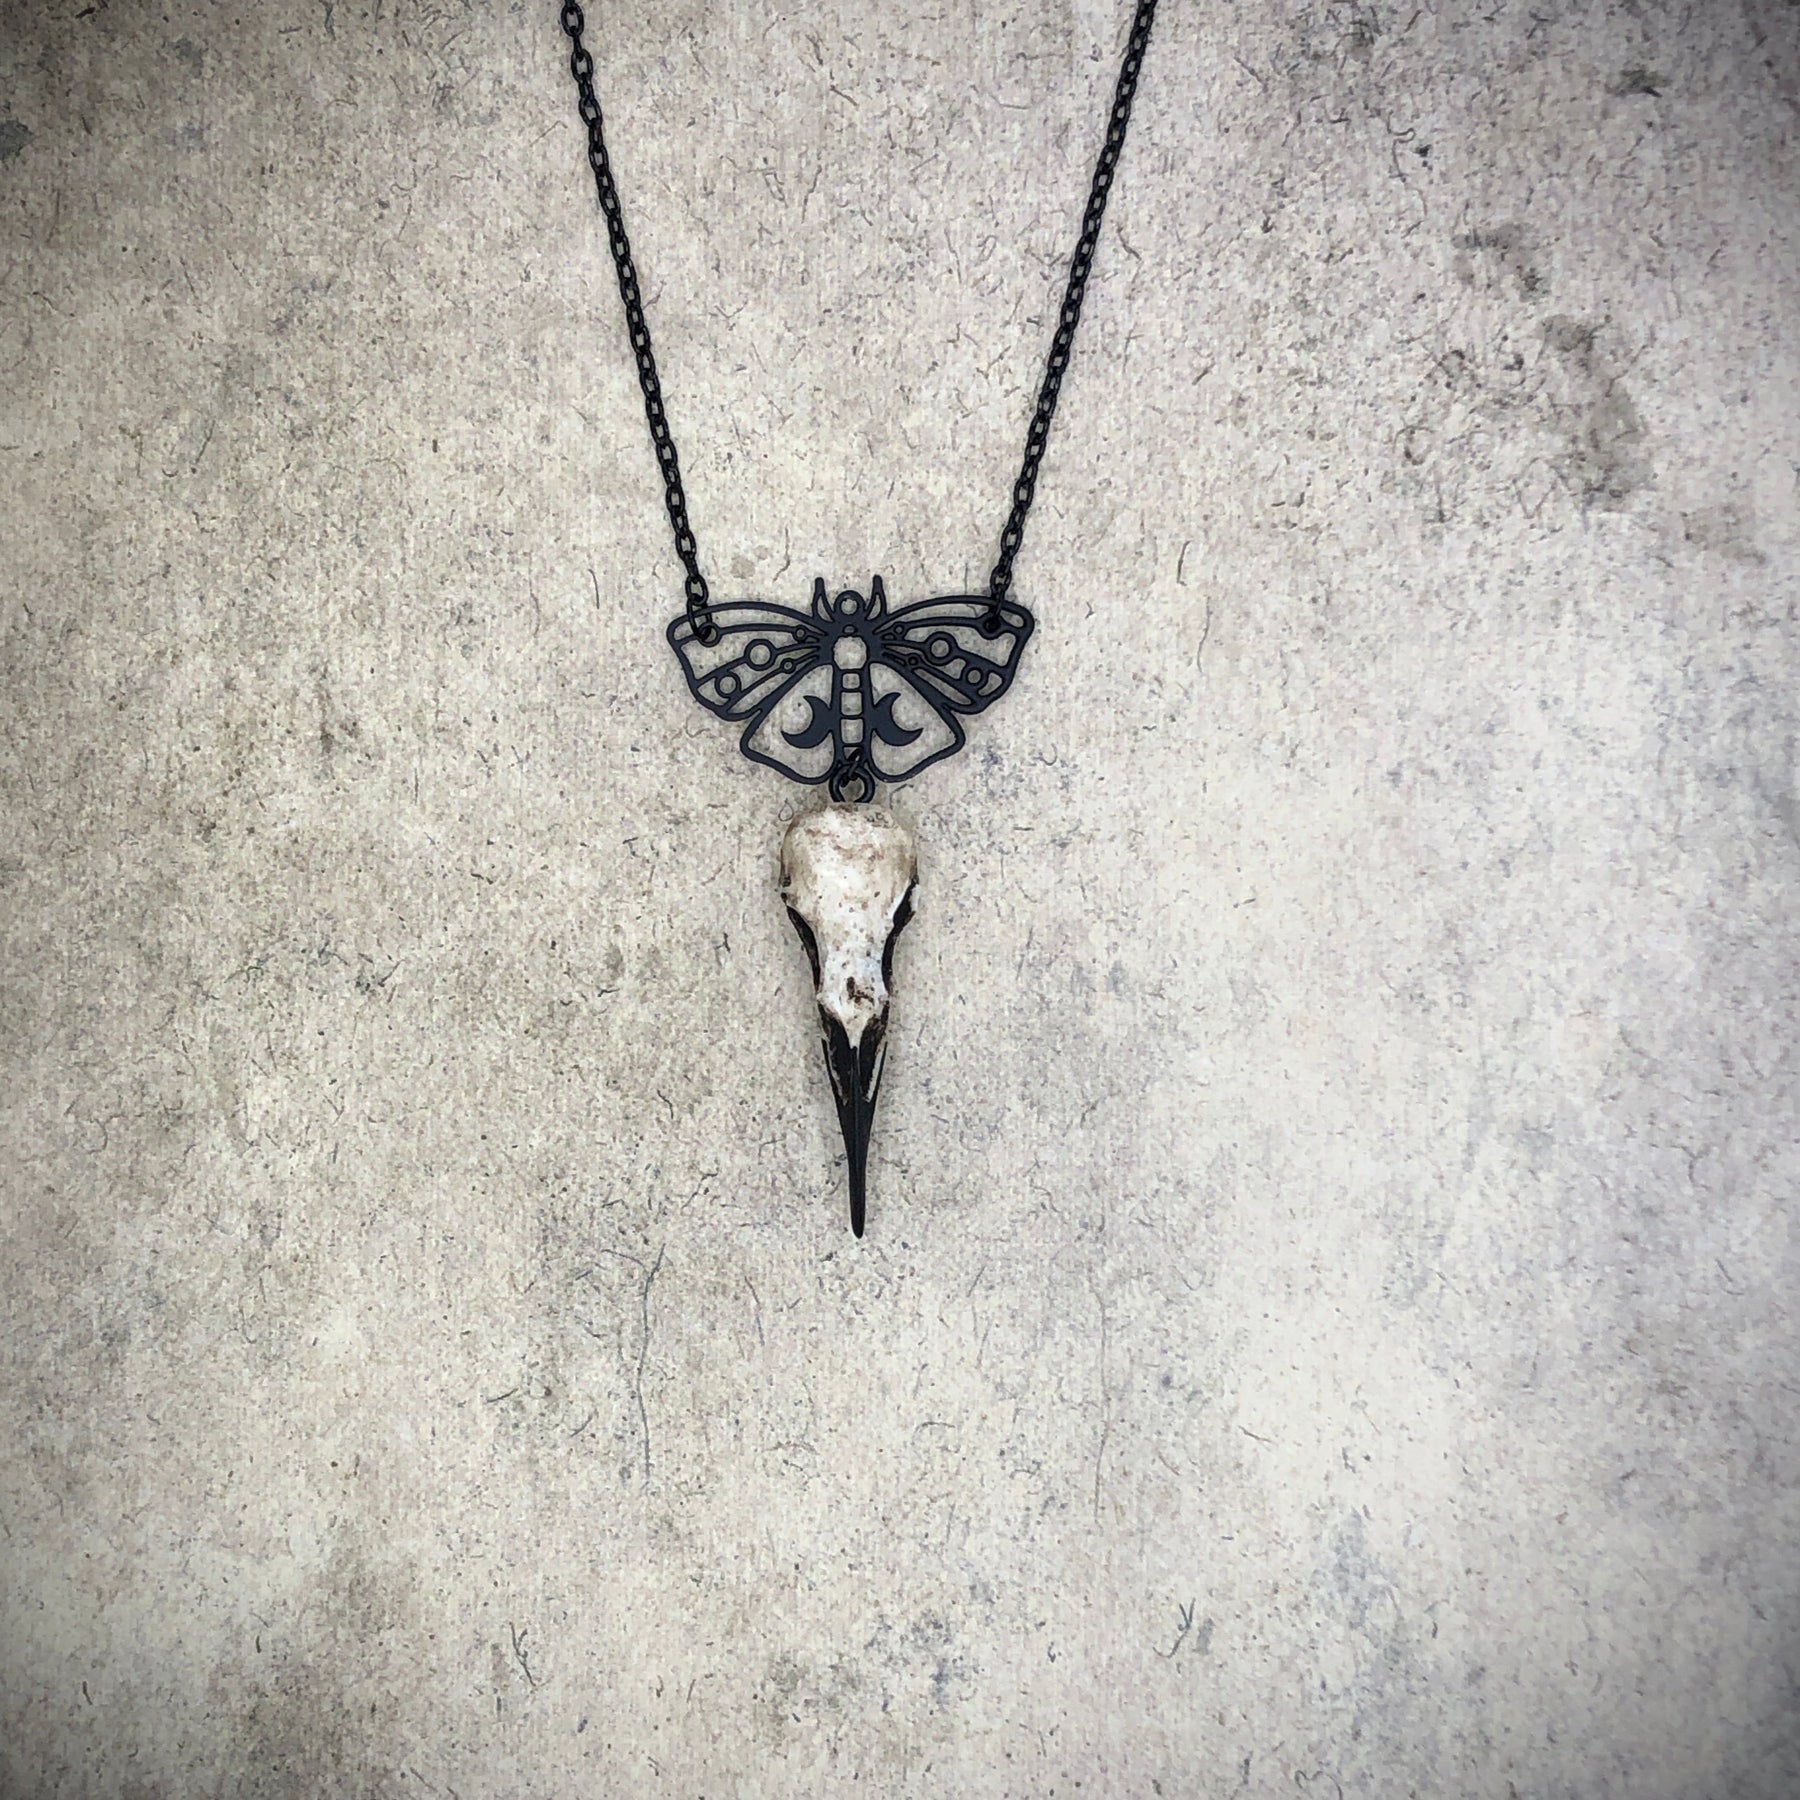 Luna moth lunar butterfly charm pendant and bone jewelry mini raven skull dangle pendant by artist making resin bird skulls.